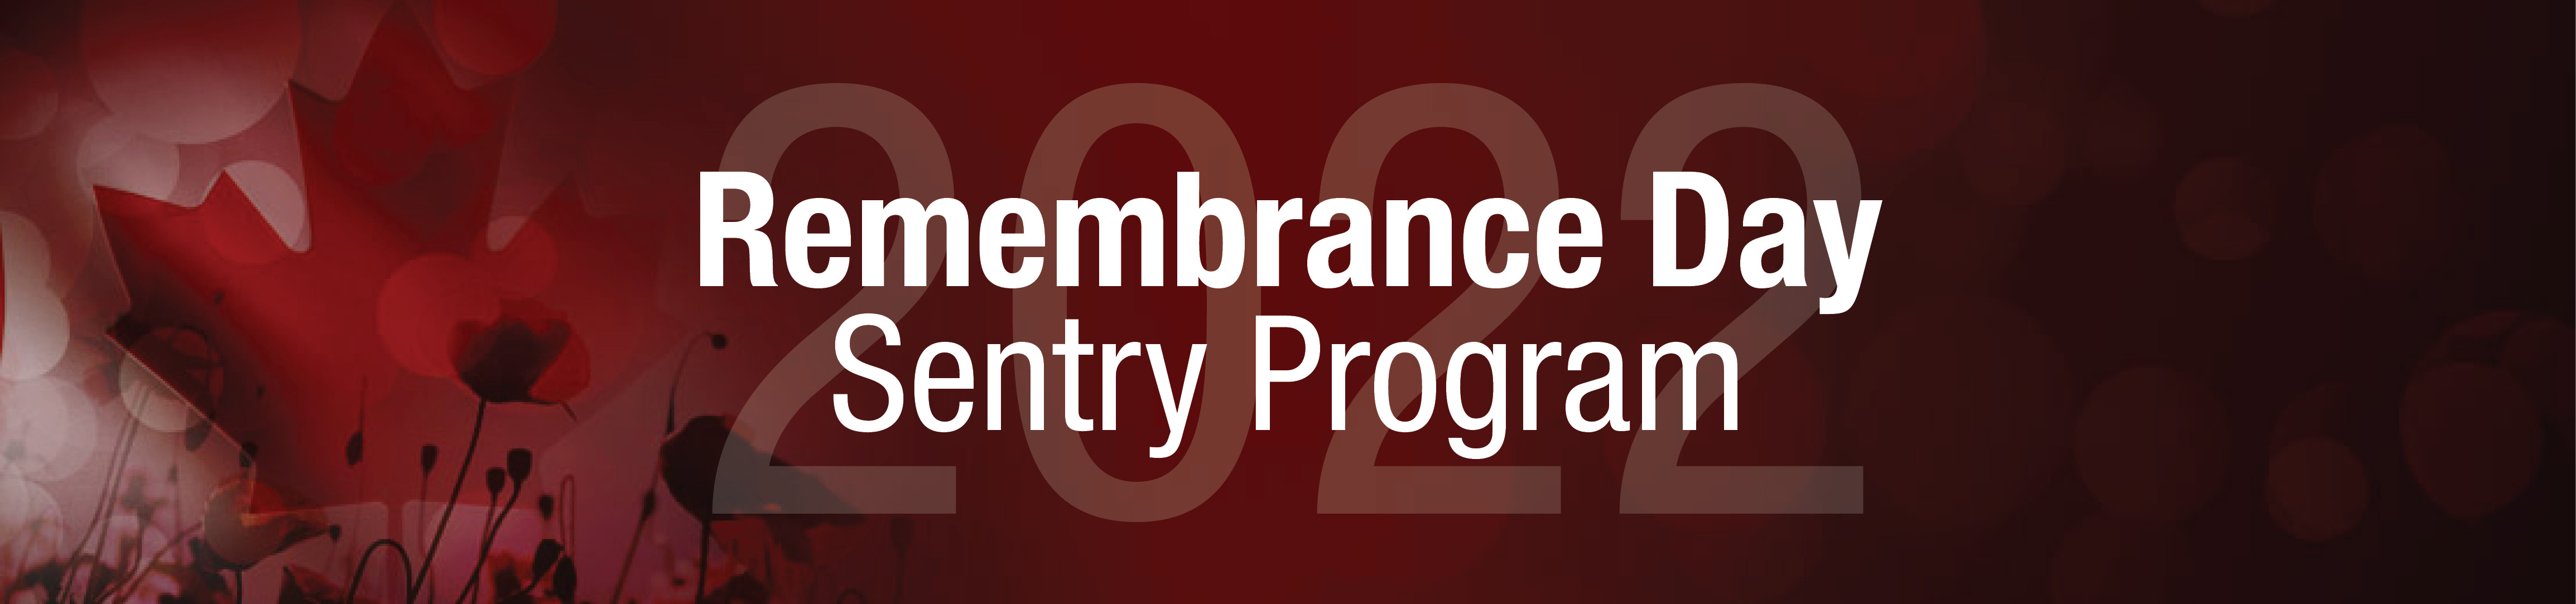 Remembrance Day Sentry Program